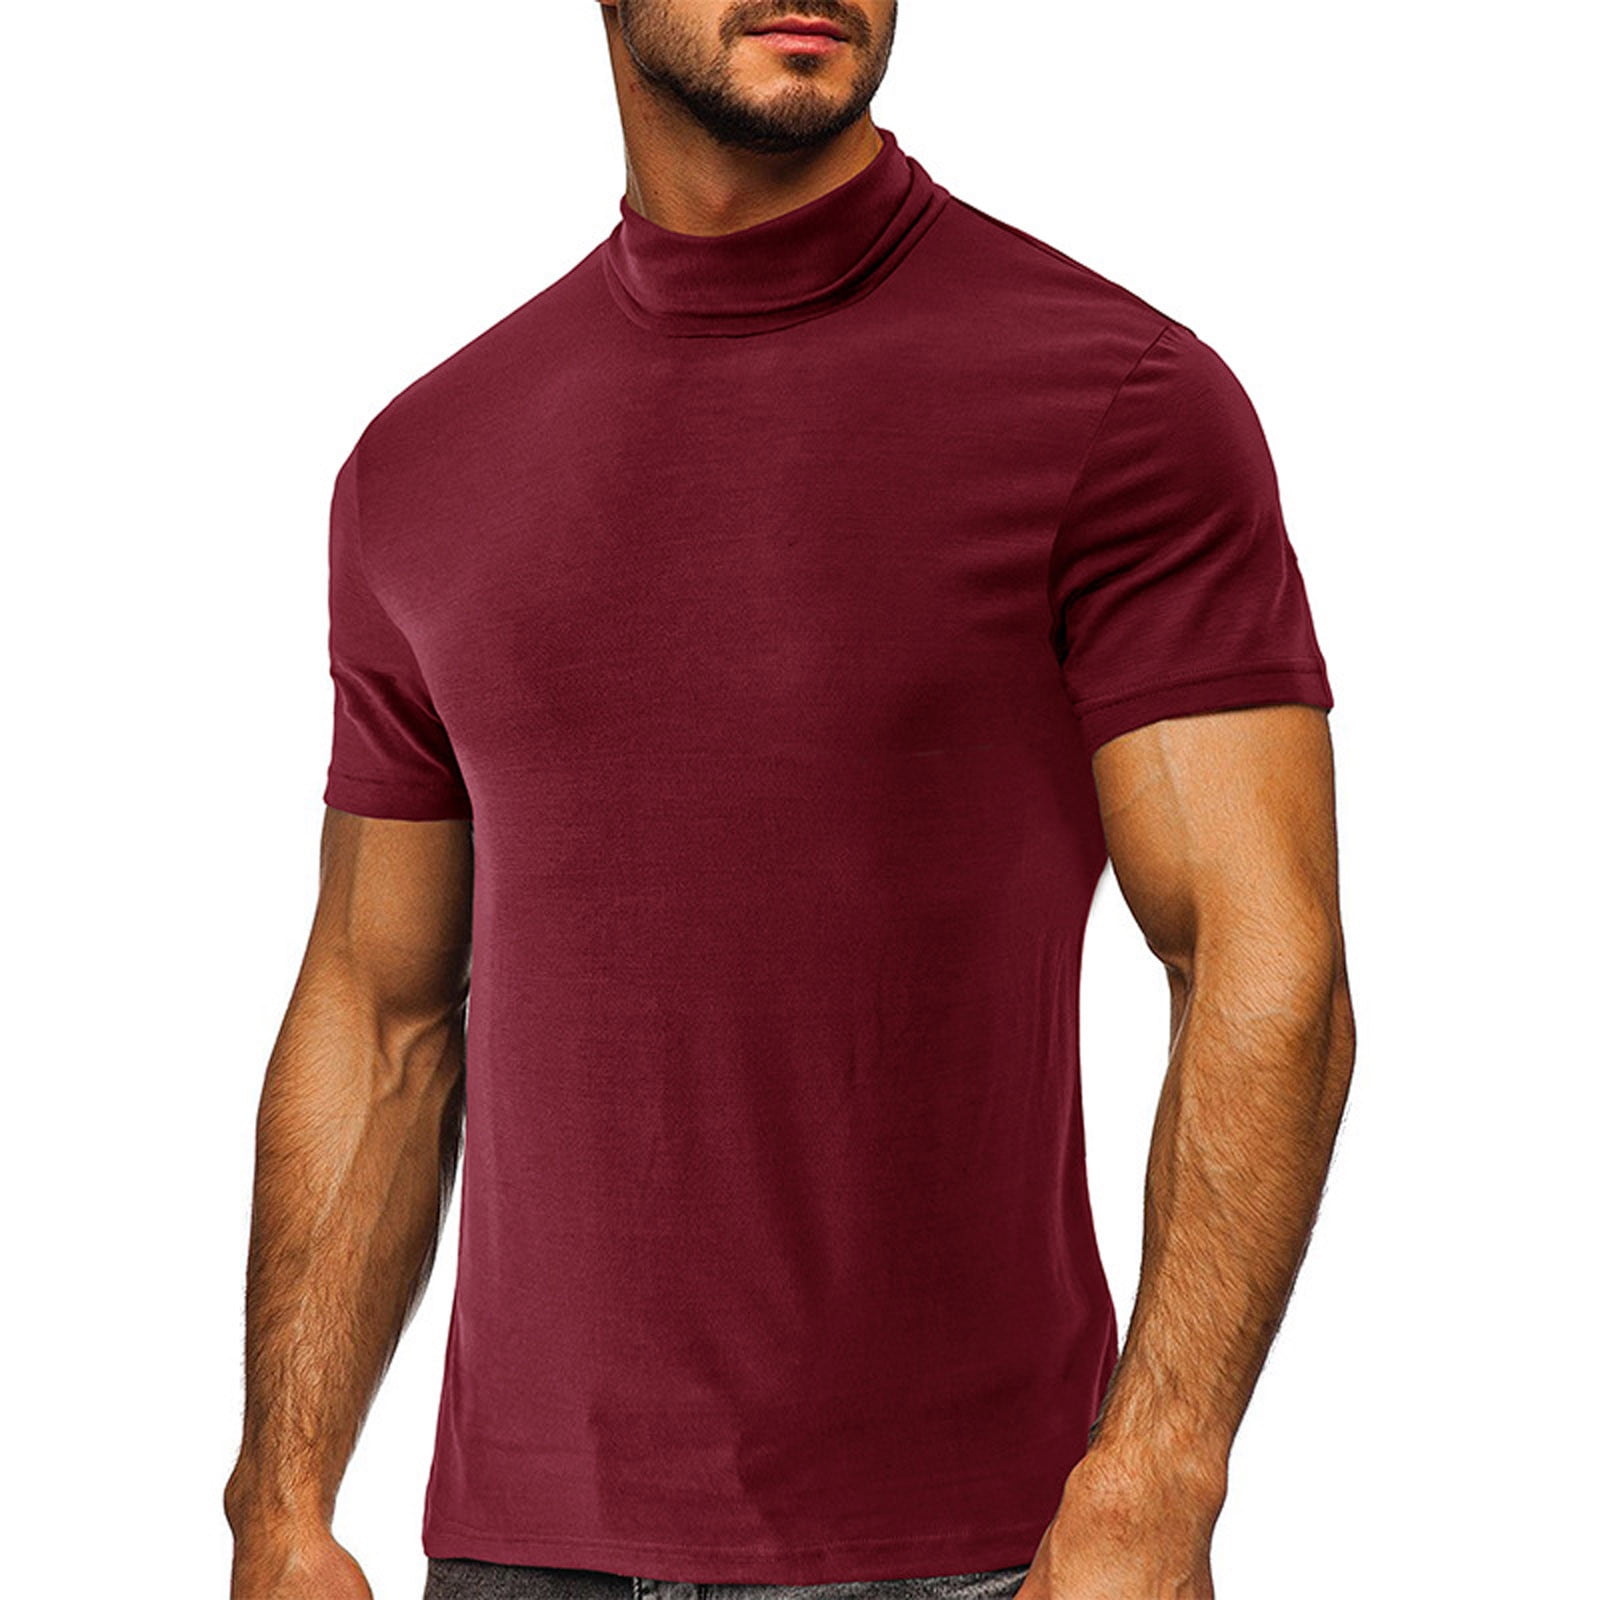 RYRJJ Mens T Shirt Short Sleeve Basic Designed Fashion Mock